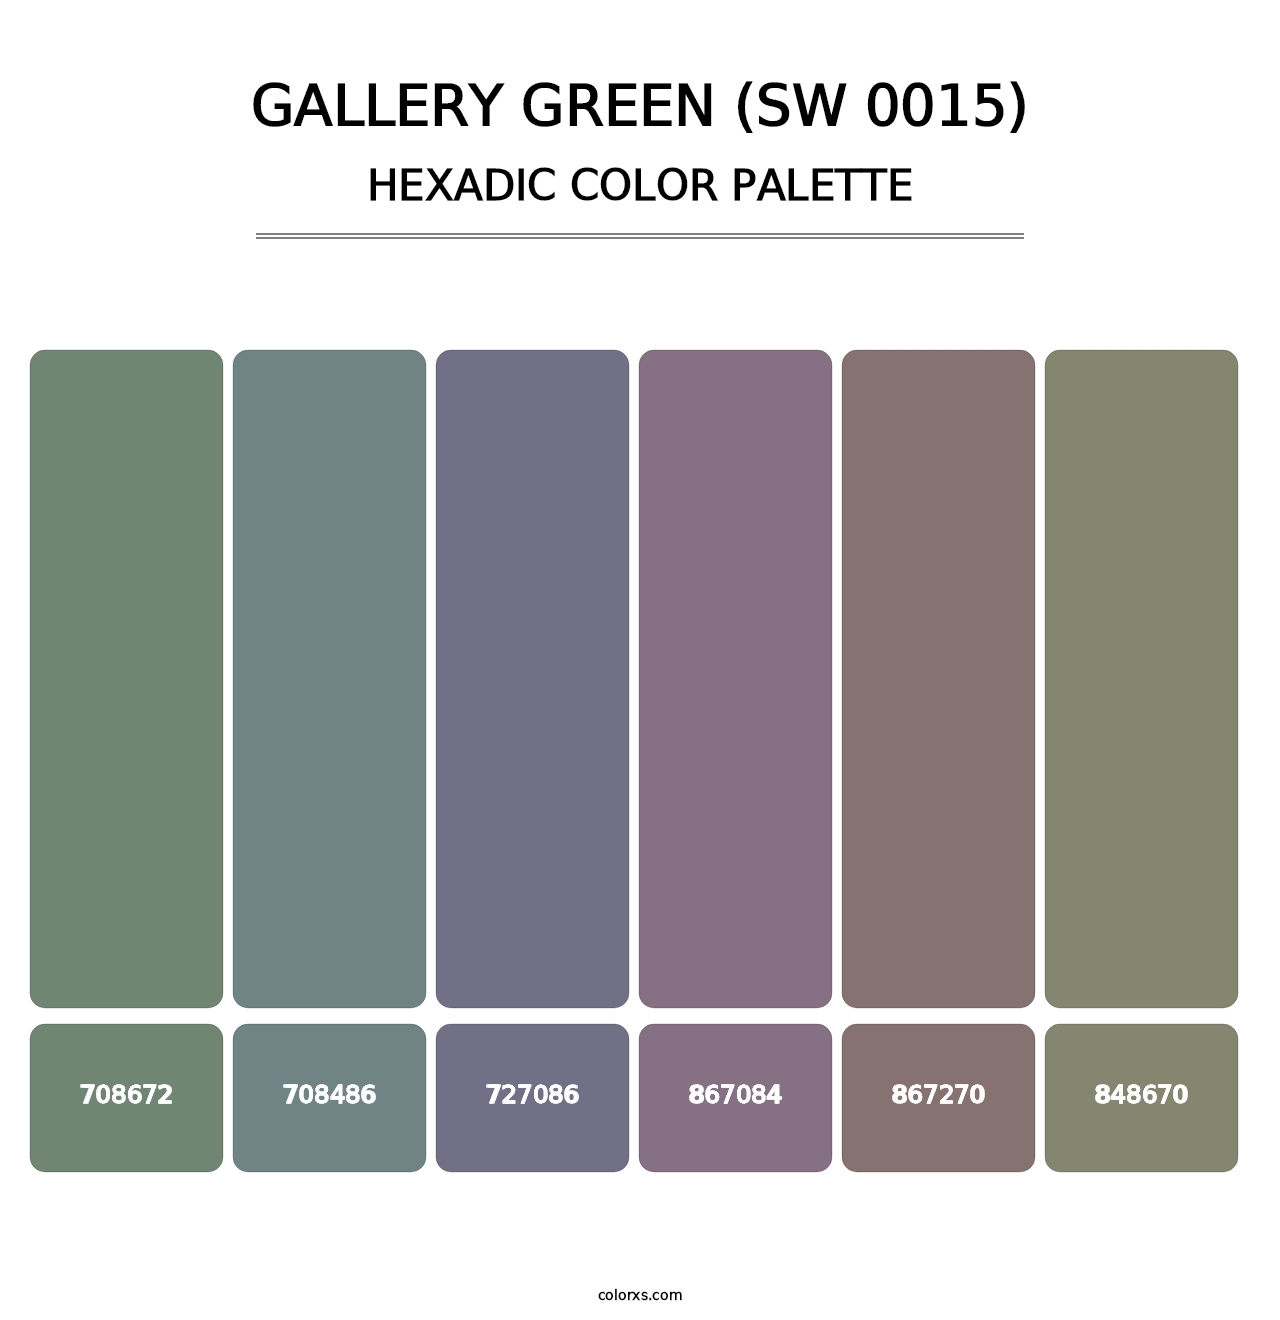 Gallery Green (SW 0015) - Hexadic Color Palette